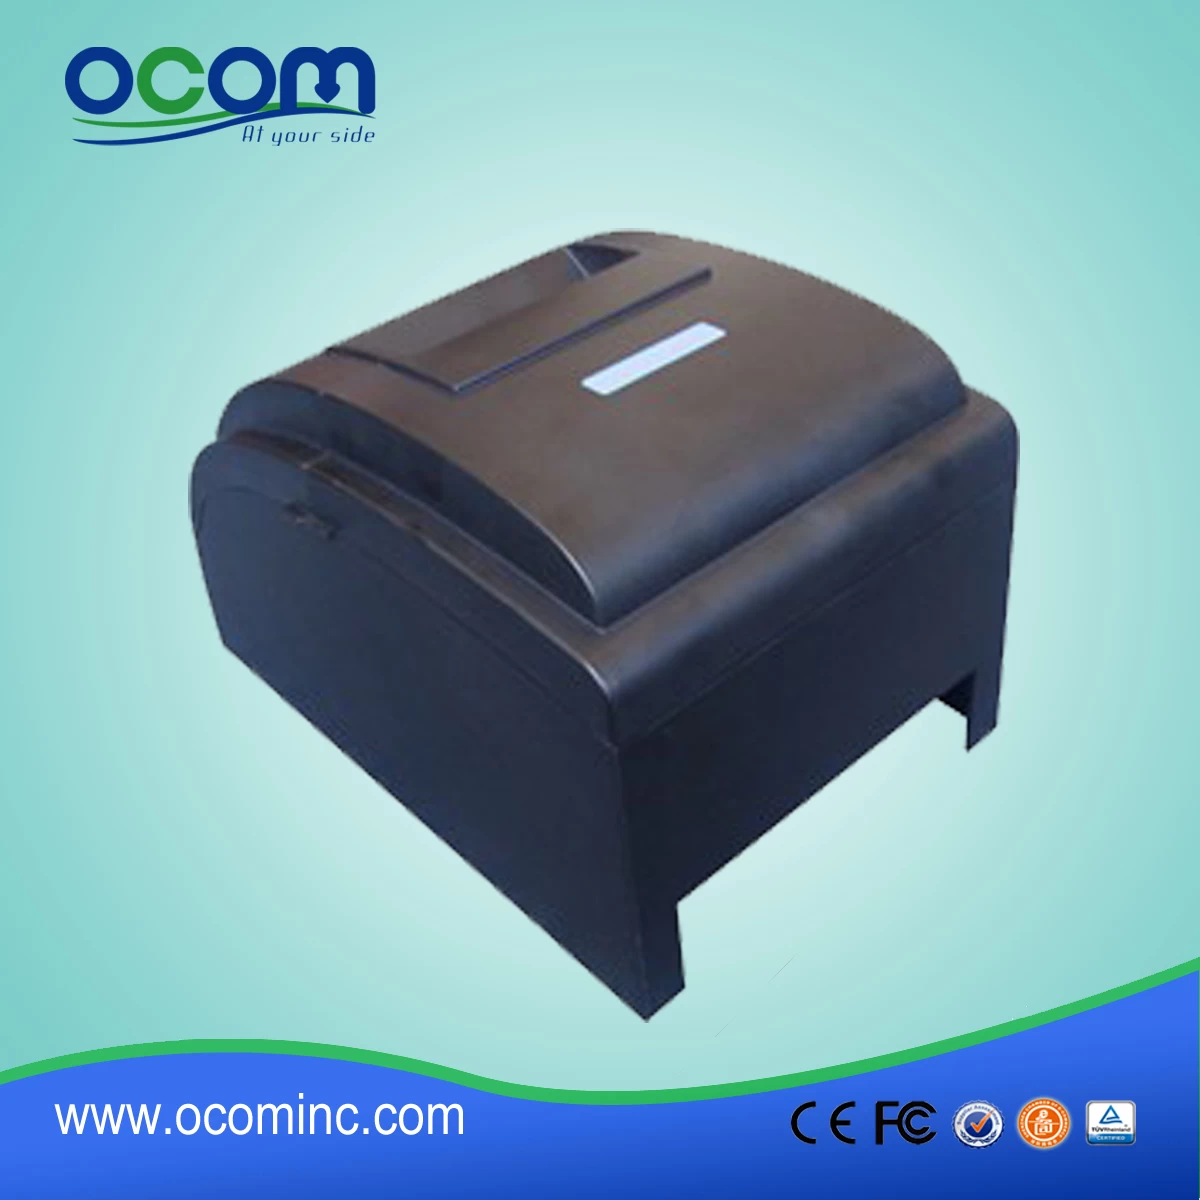 (OCPP-764) 76MM Portable Auto-cutter Impact Dot Matrix Bill Printer